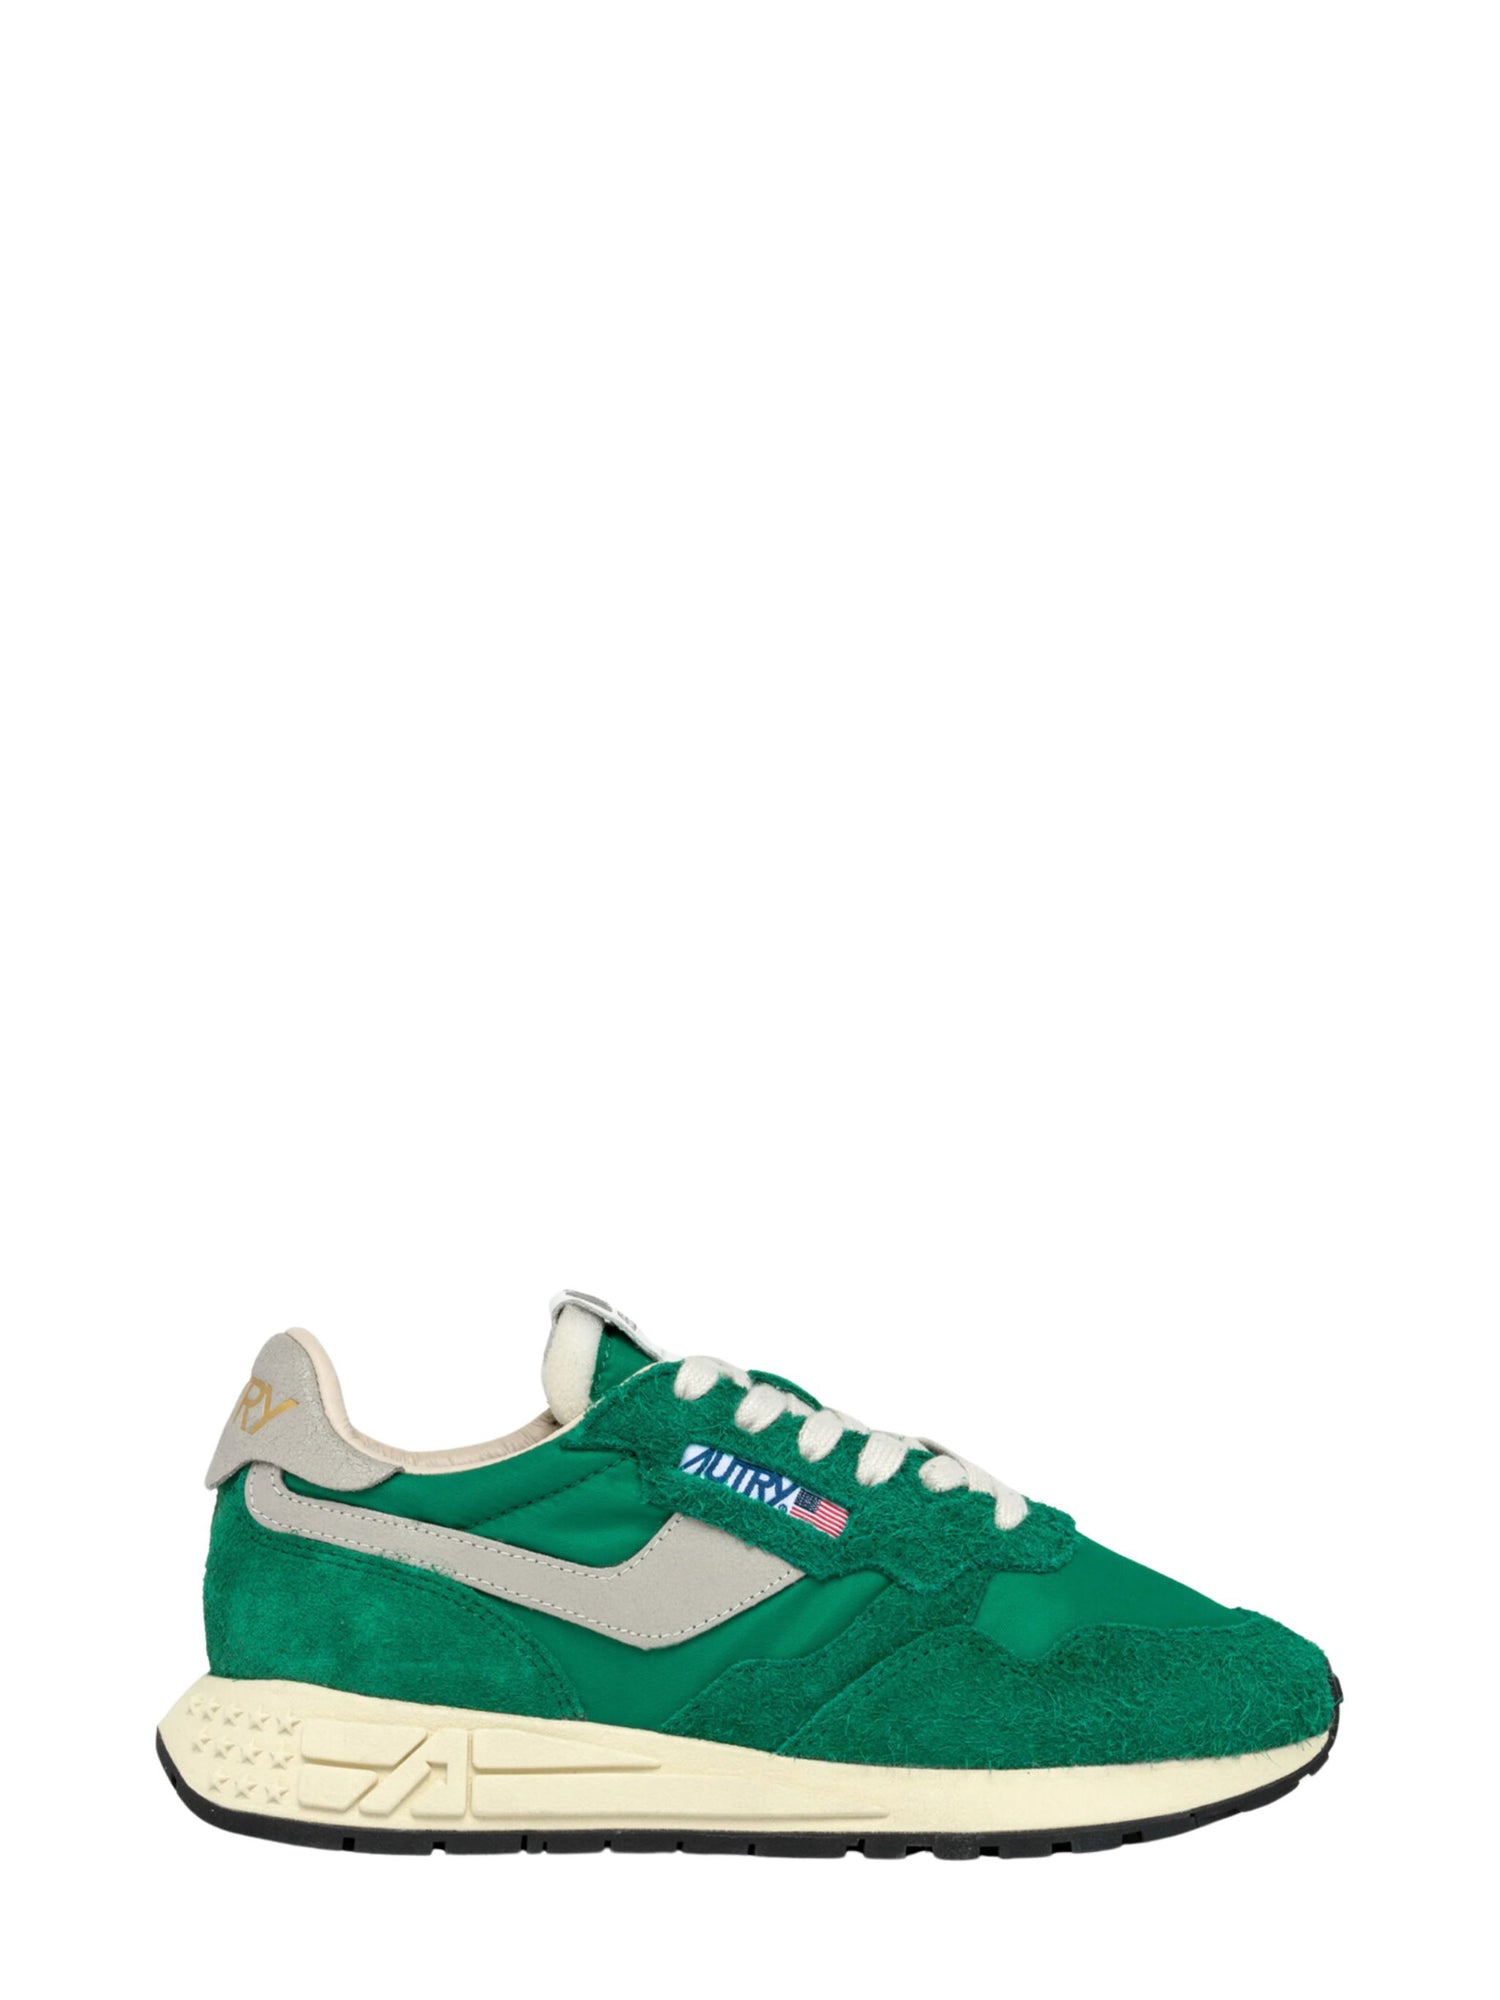 Reelwind low sneakers, white/green